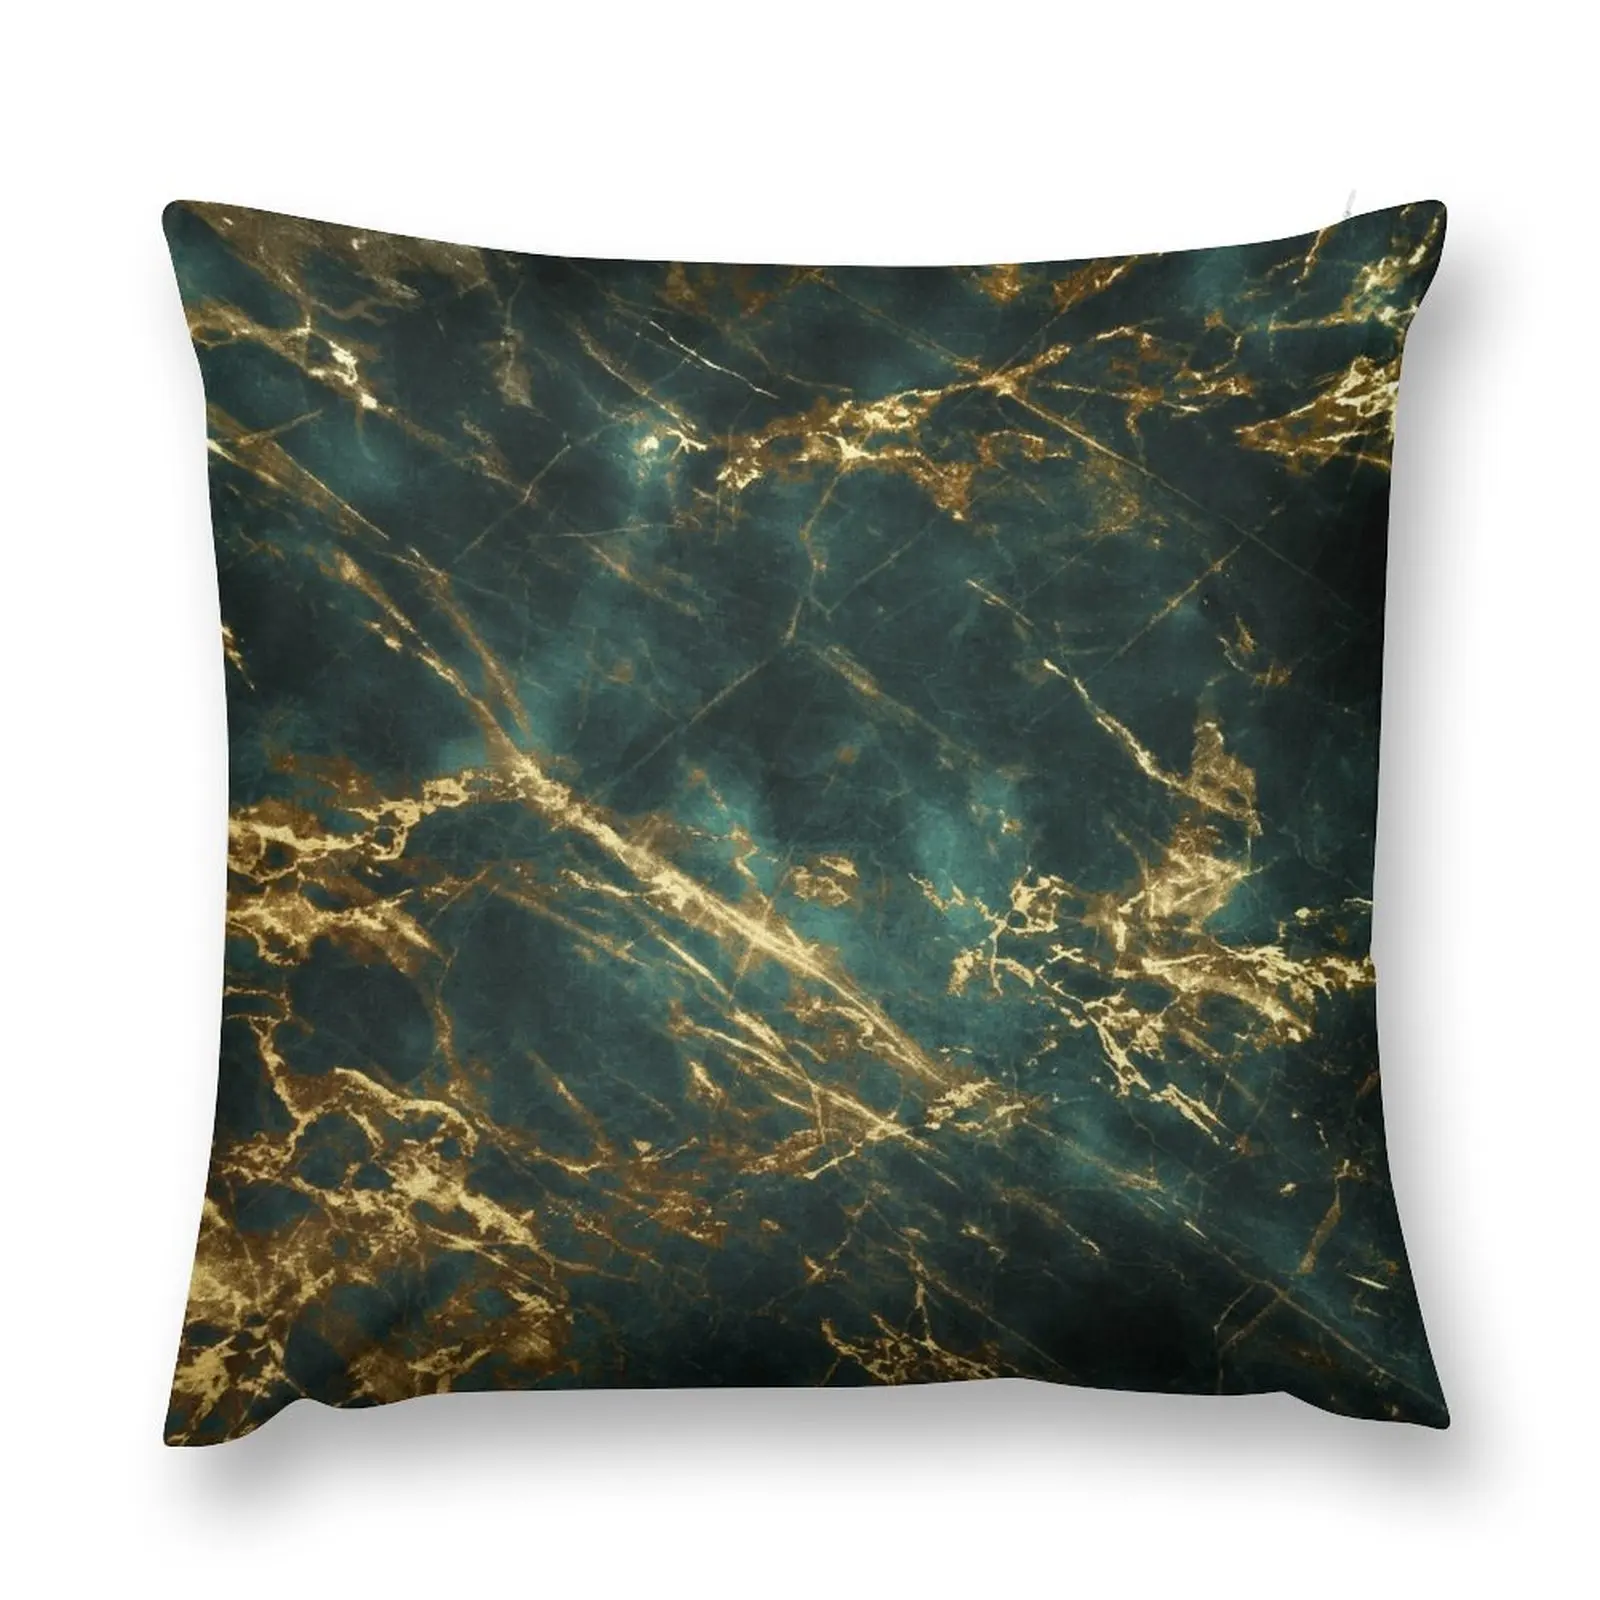 

Lavish (Faux) Velvet Green (Faux) Marble With Ornate (Faux) Gold Veins Throw Pillow sleeping pillows Plaid Sofa